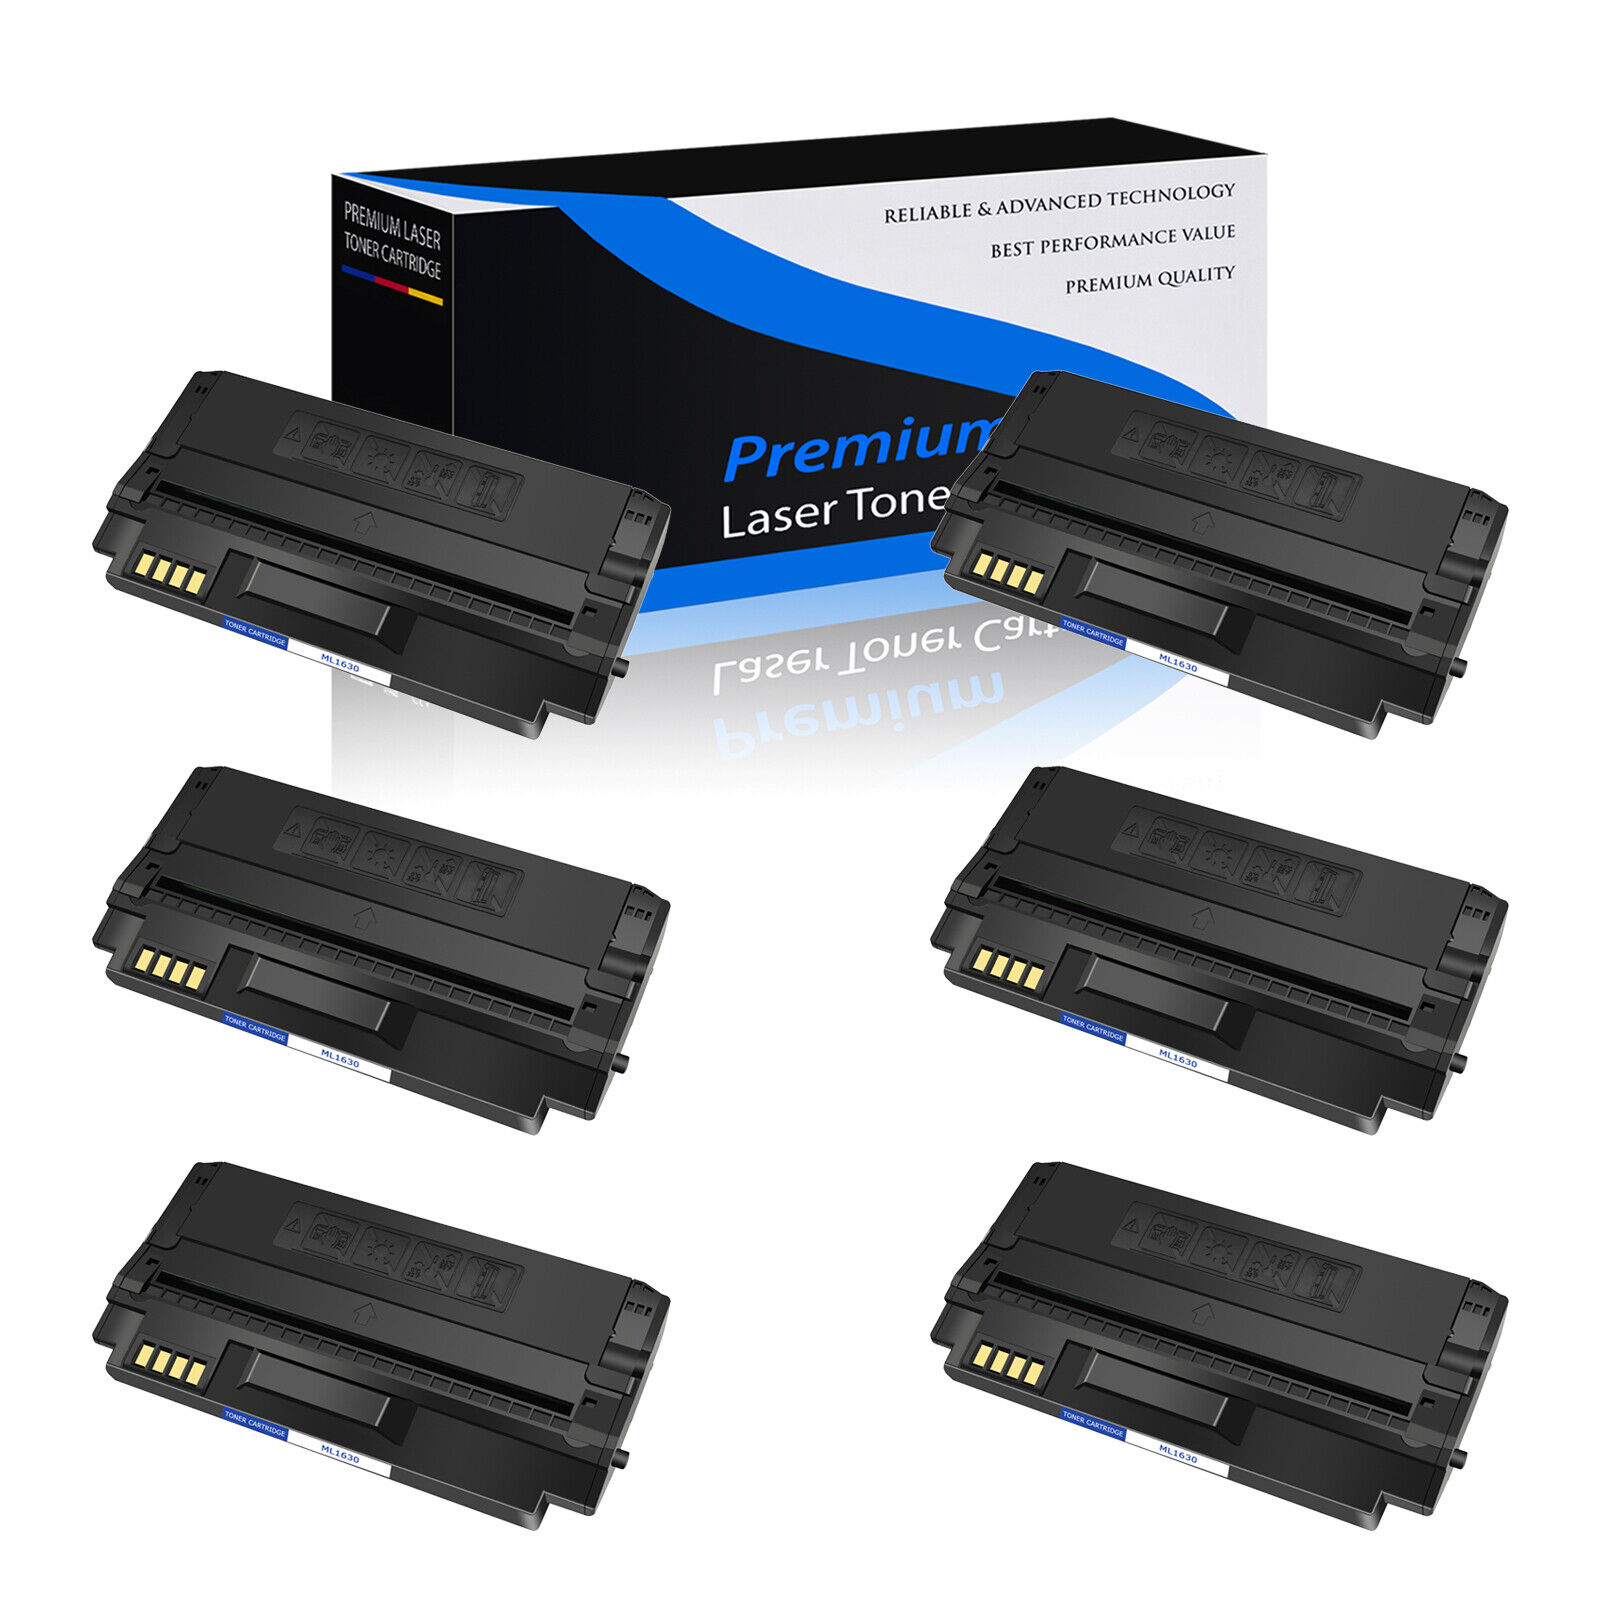 6PK ML1630 Black Toner Cartridge for Samsung ML-1630 SCX-4500 SCX-4500W Printer